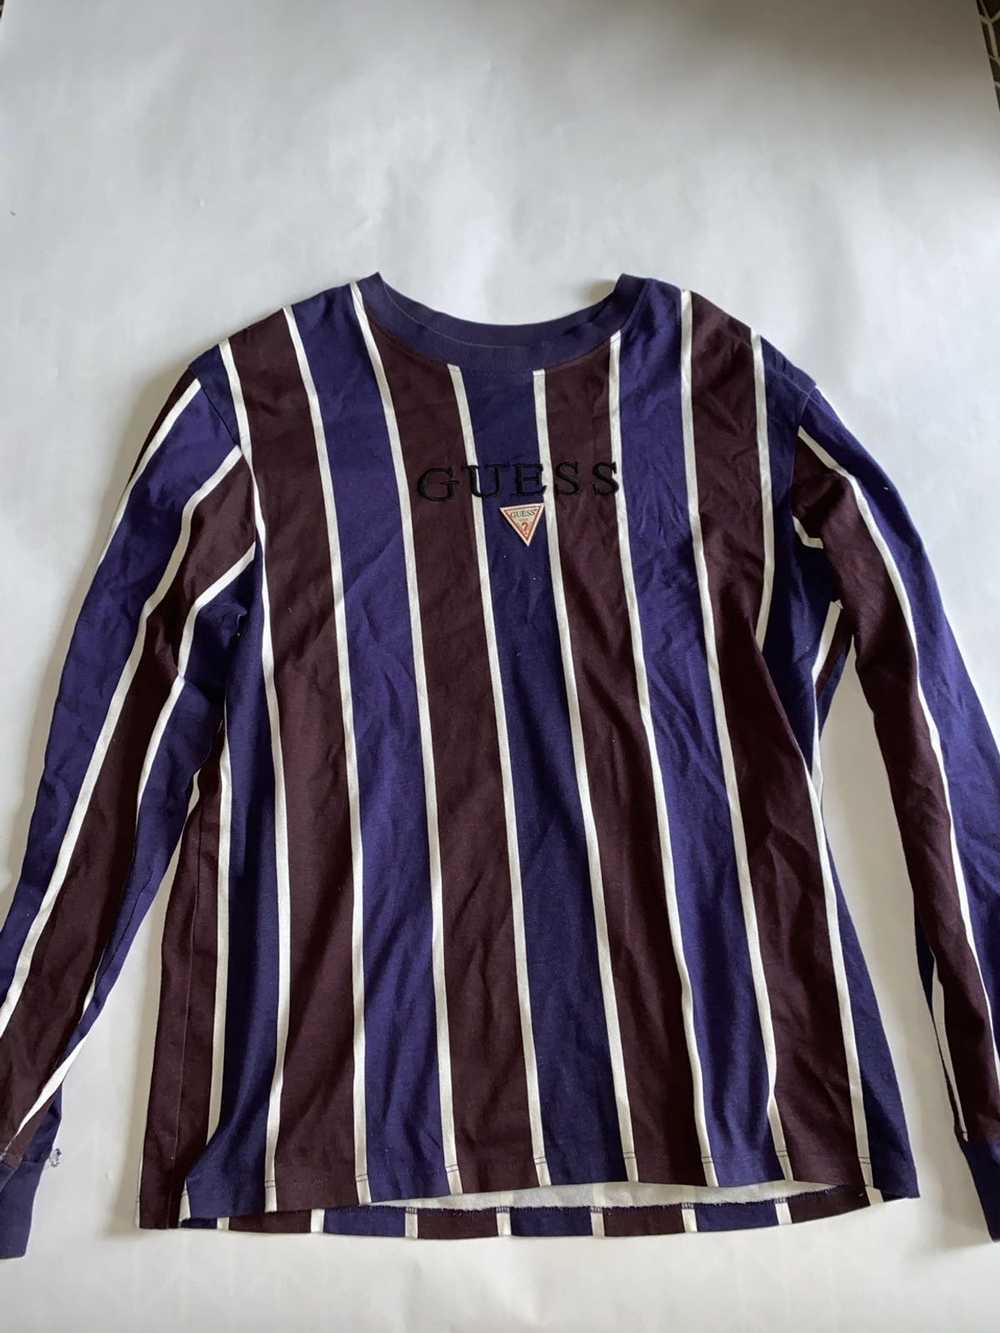 Guess Guess Originals Long Sleeve Shirt Vintage S… - image 1